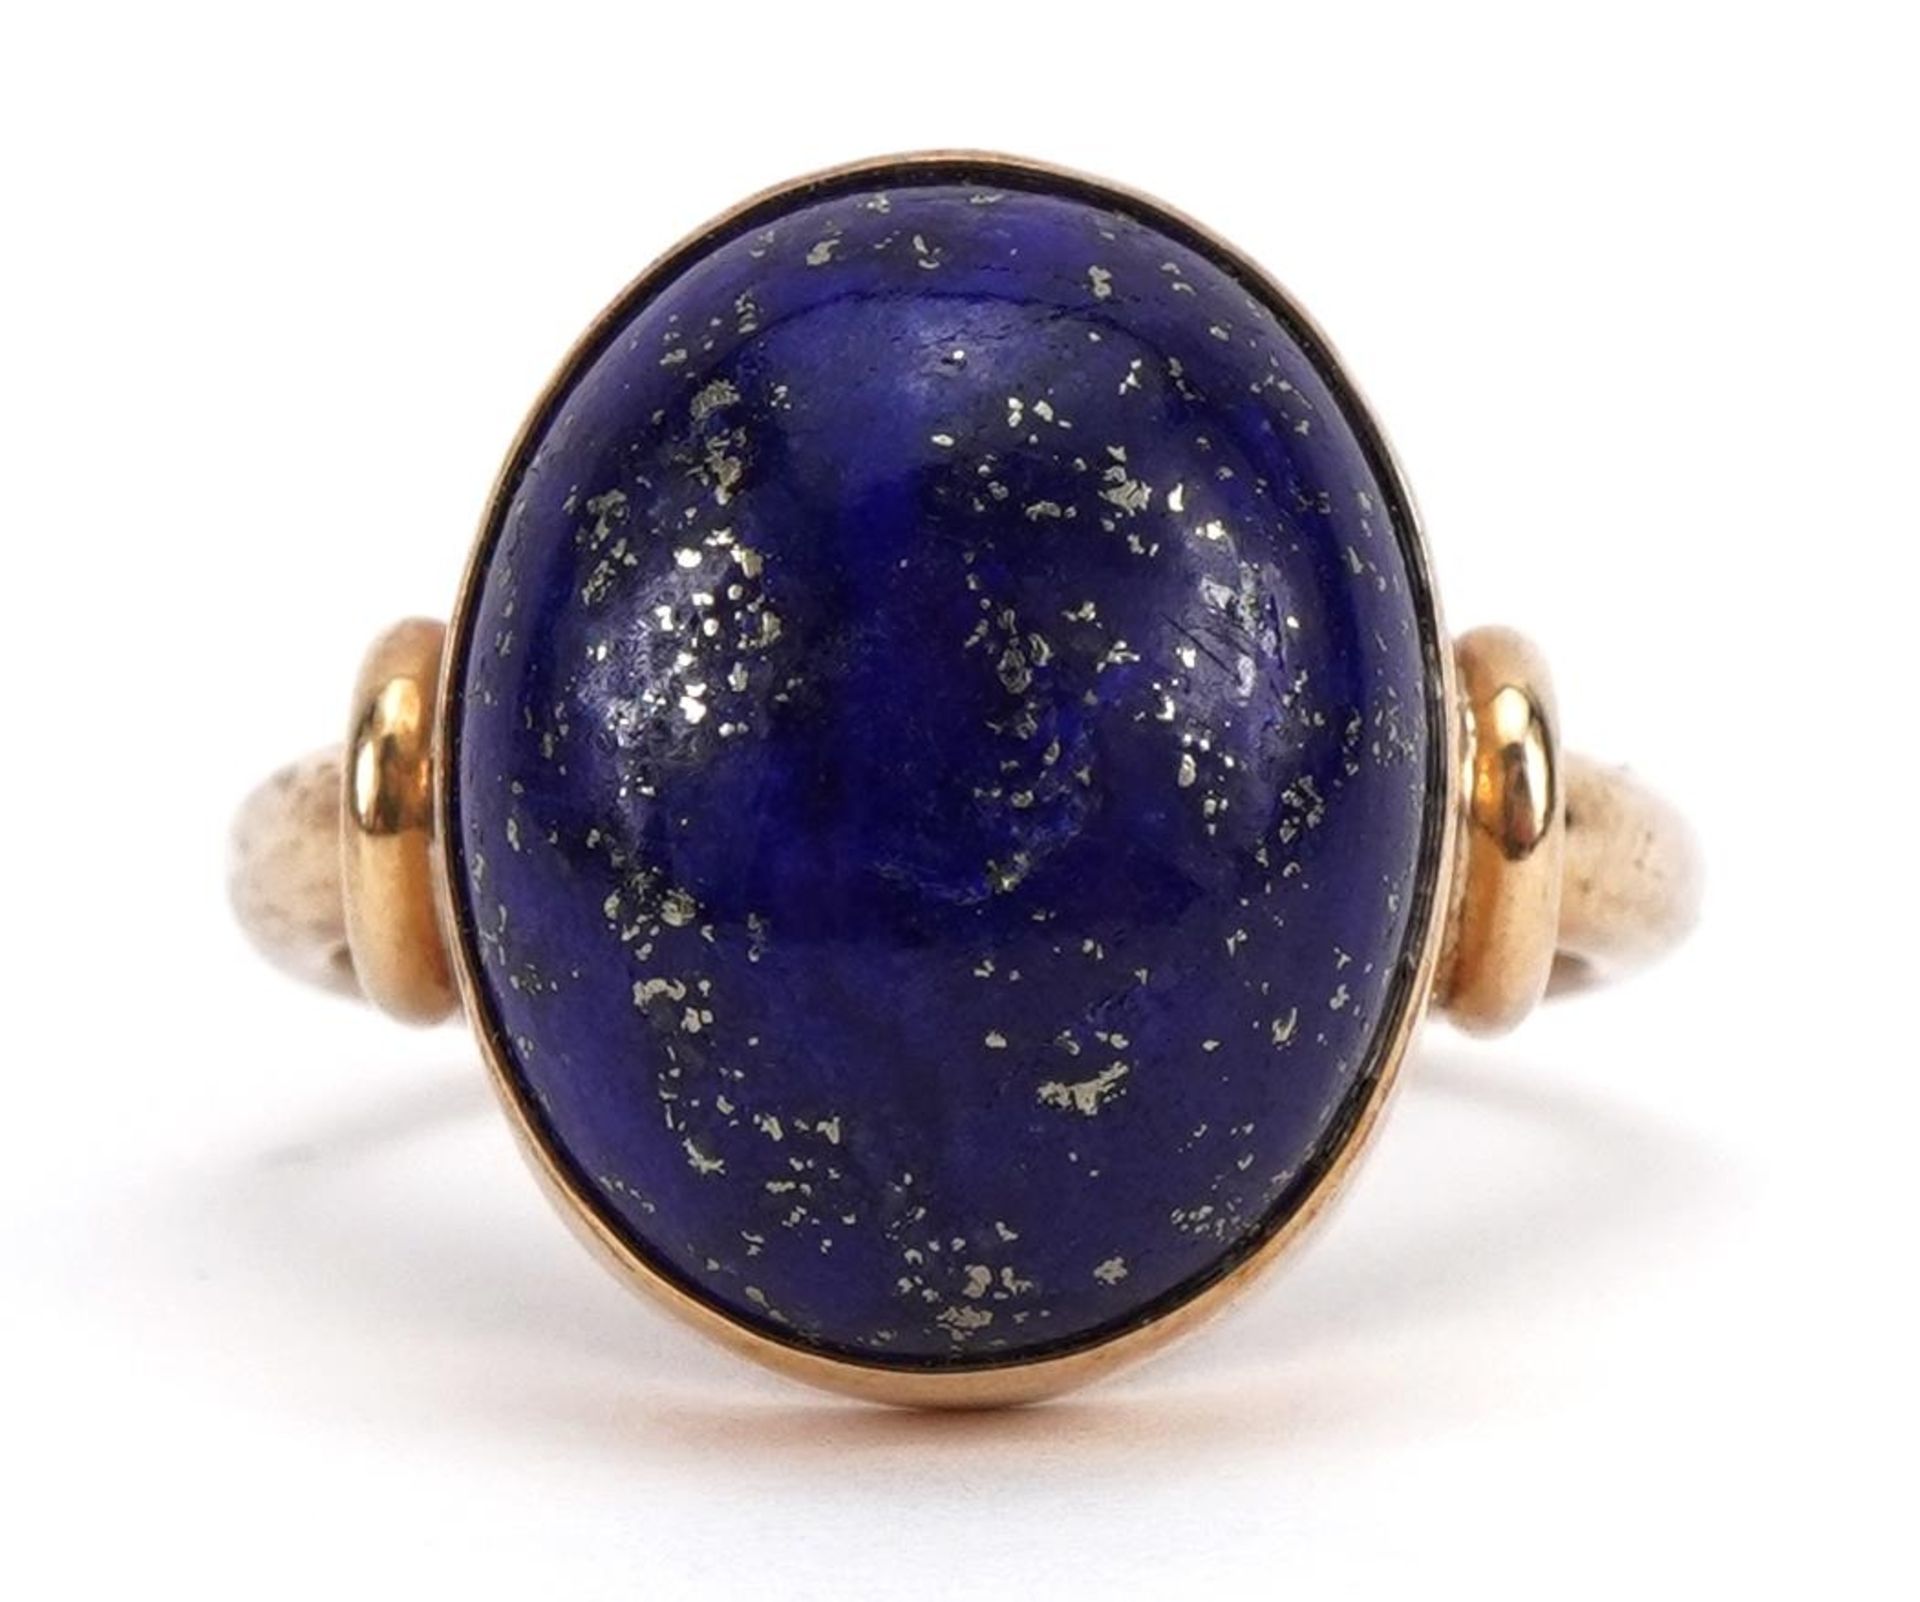 Jon & Valerie Hill, 9ct gold cabochon lapis lazuli ring housed in a Jon & Valerie Hill box,